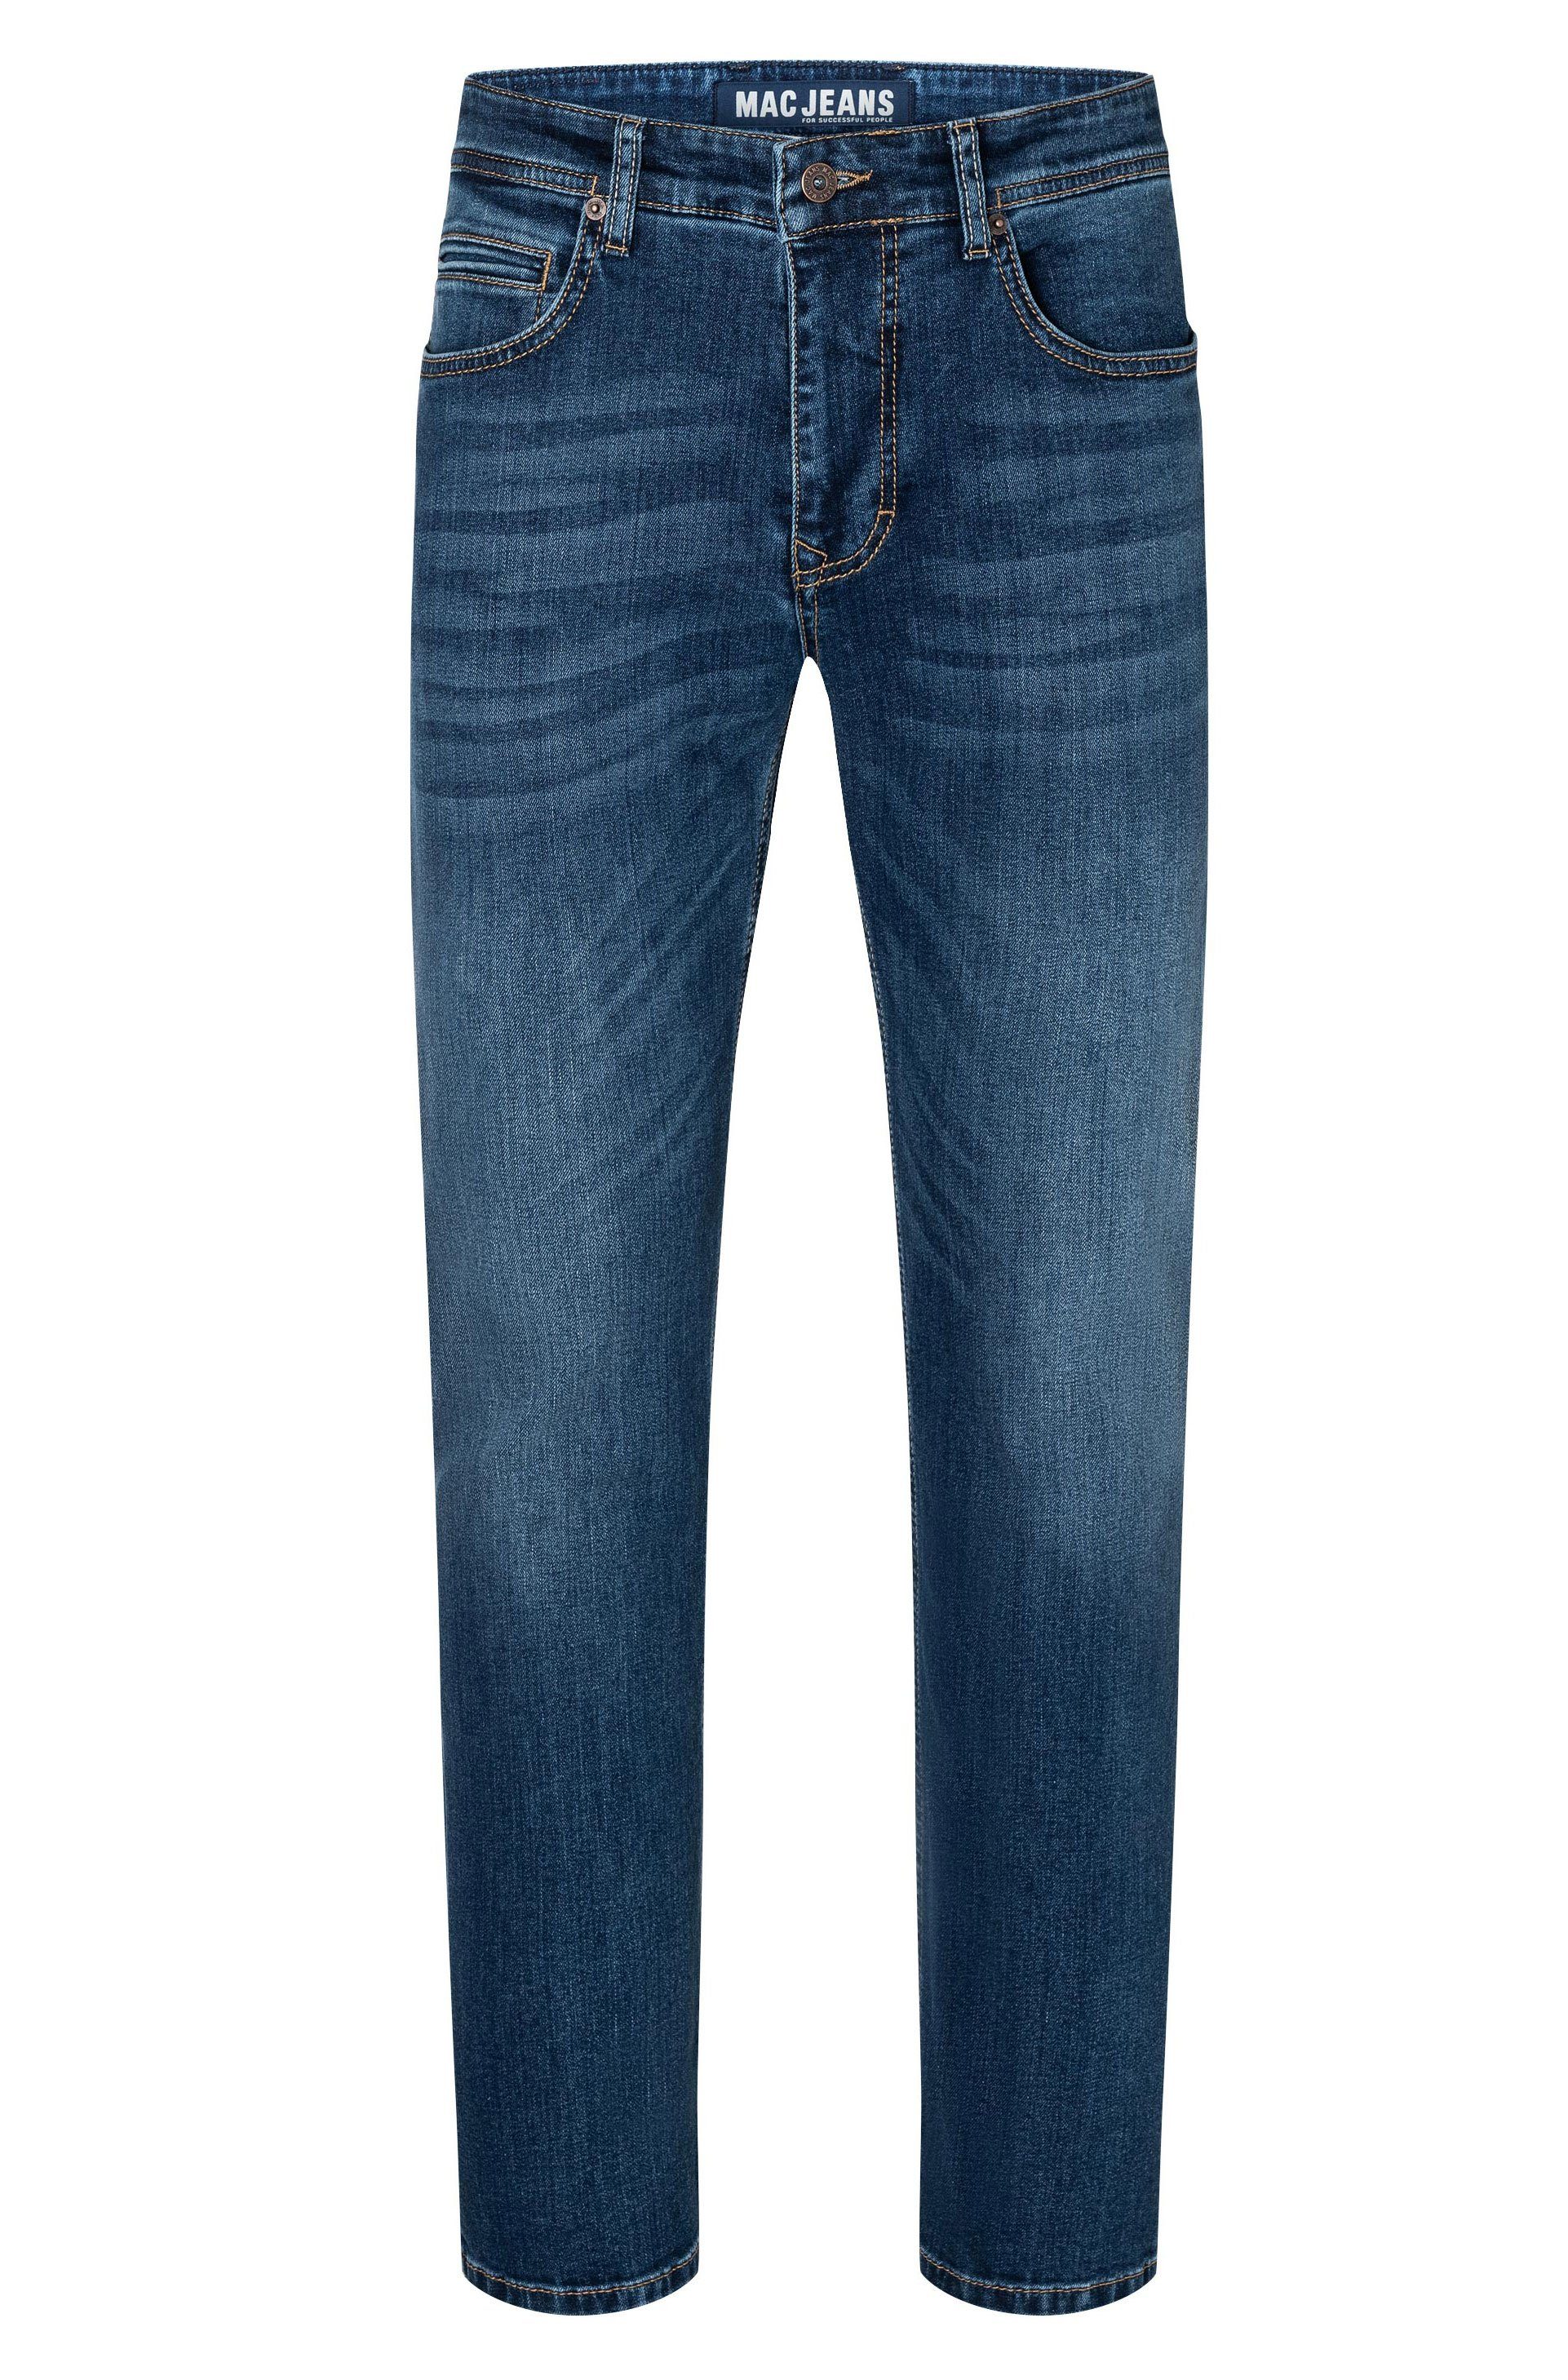 MAC 5-Pocket-Jeans Arne Stretch Denim navy blue authentic wash